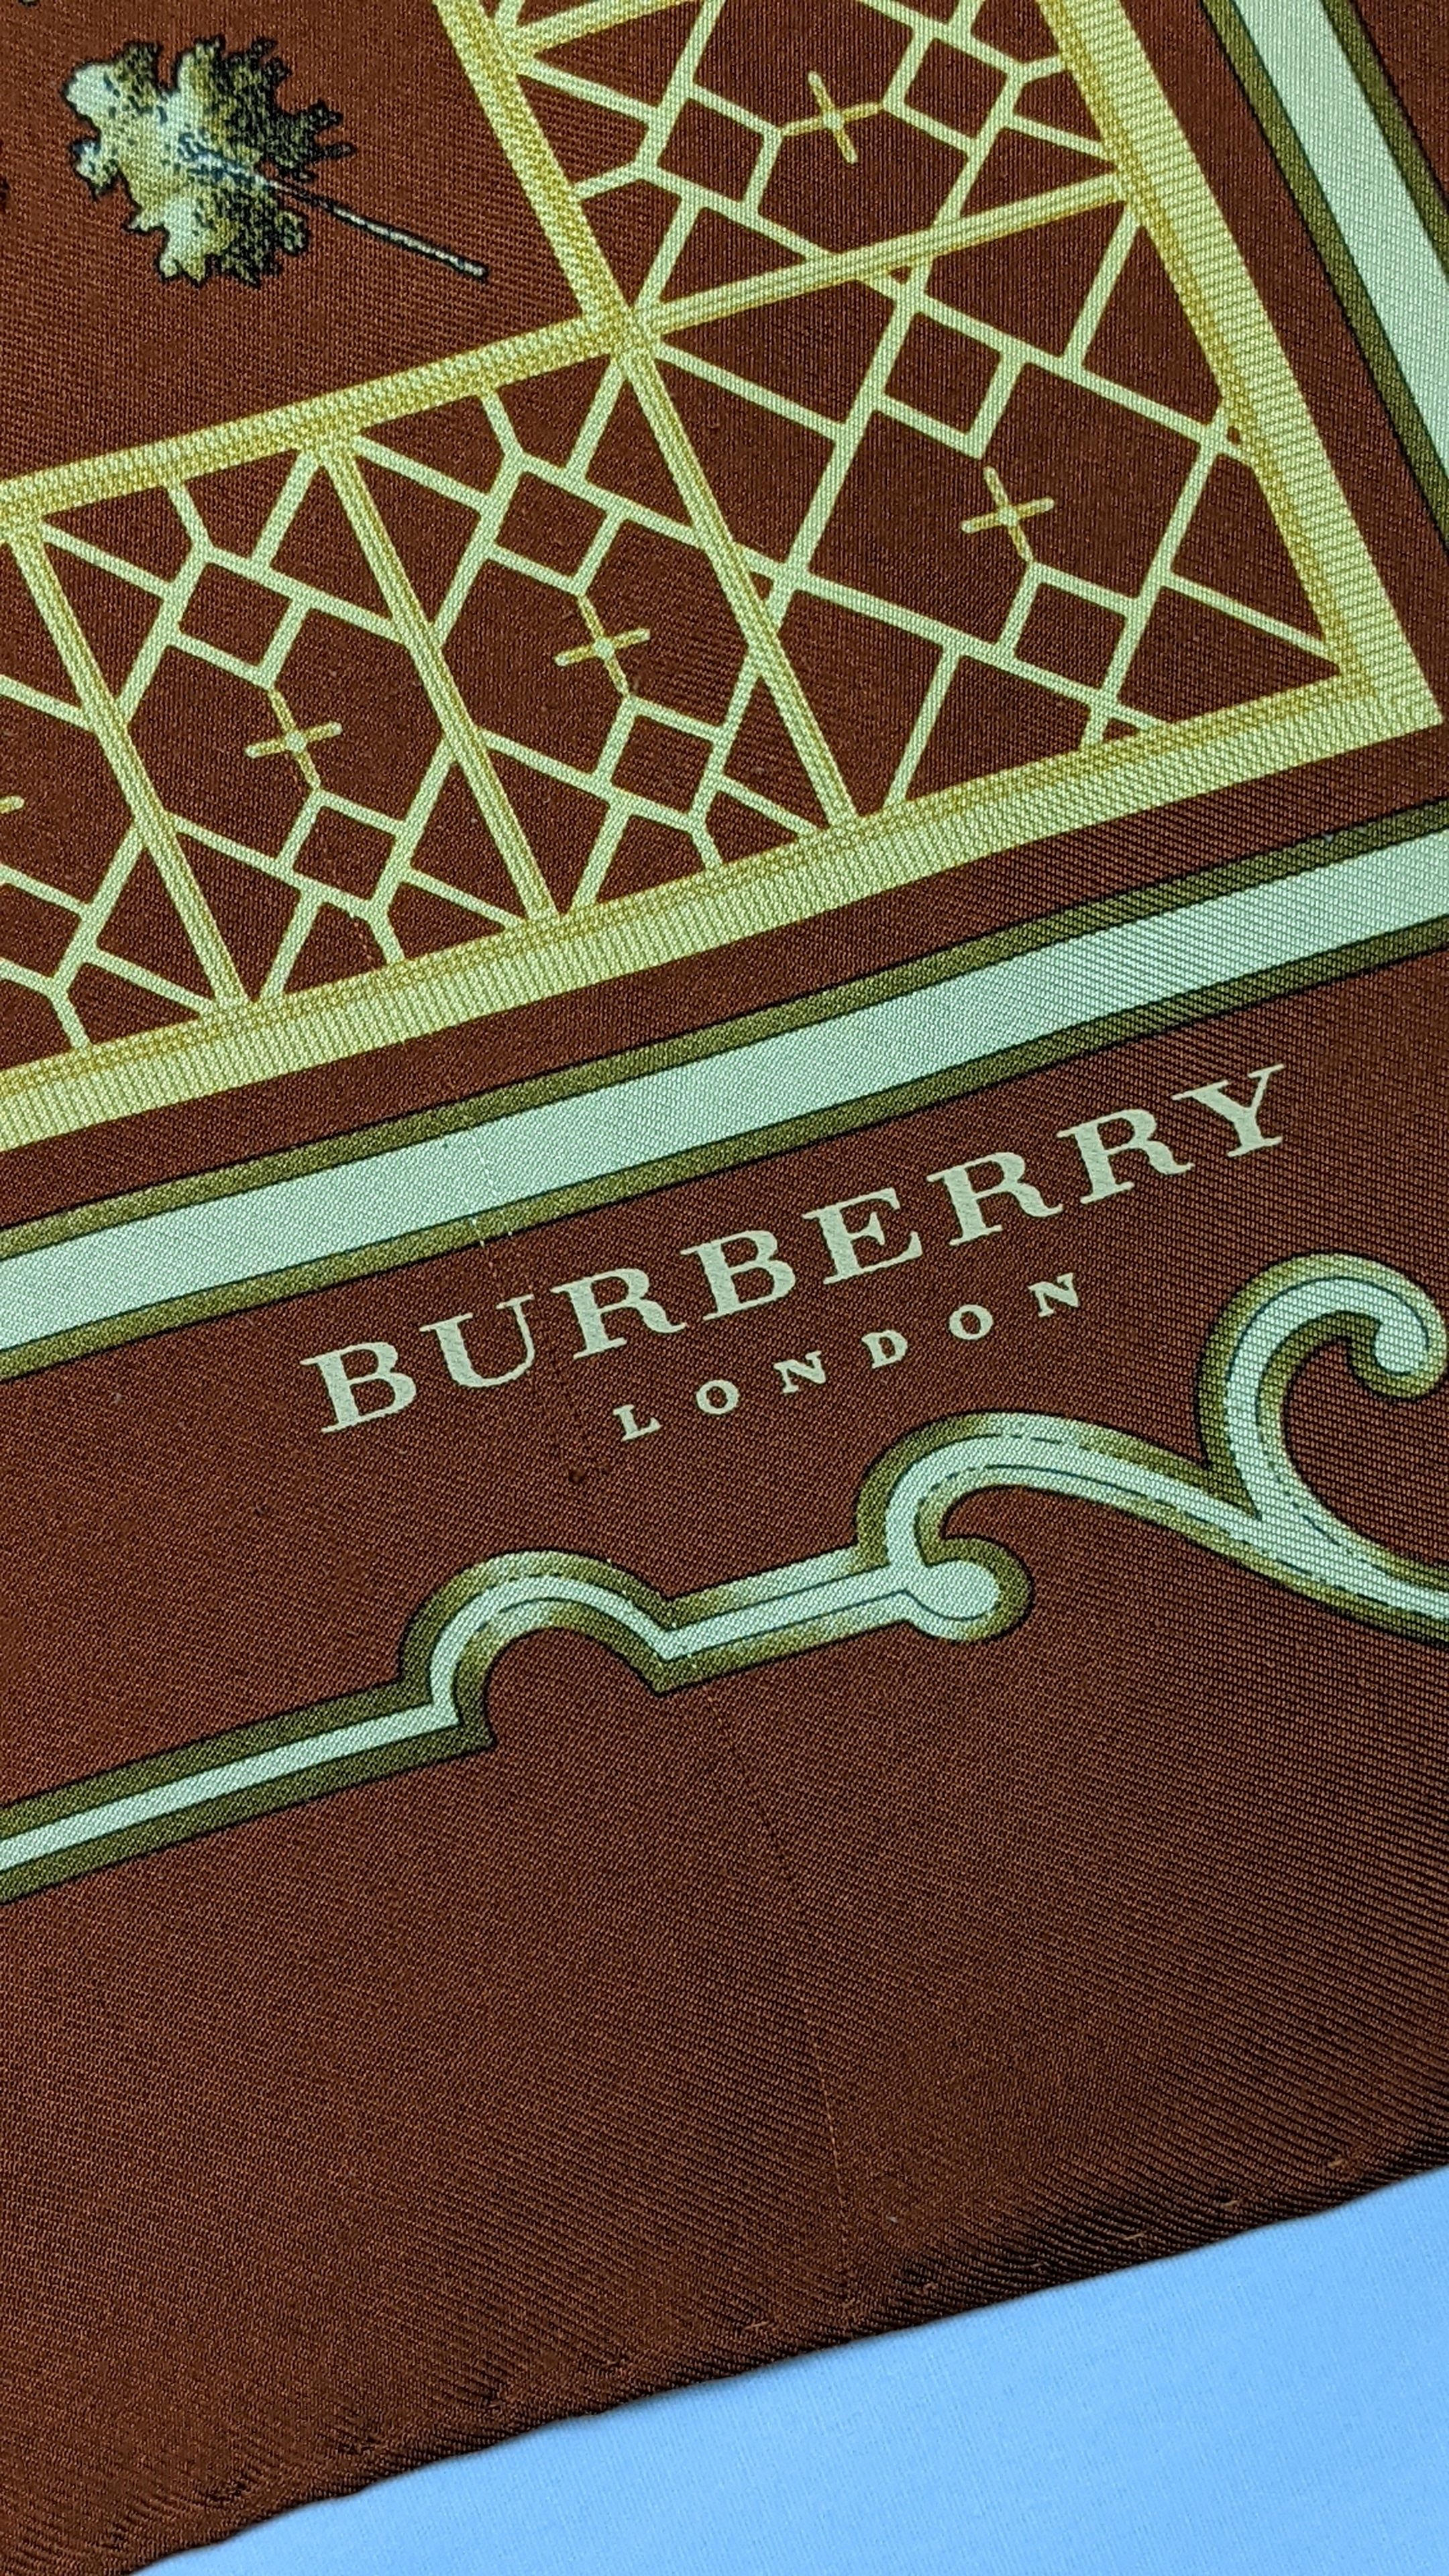 Burberry London Silk Scarf - 7